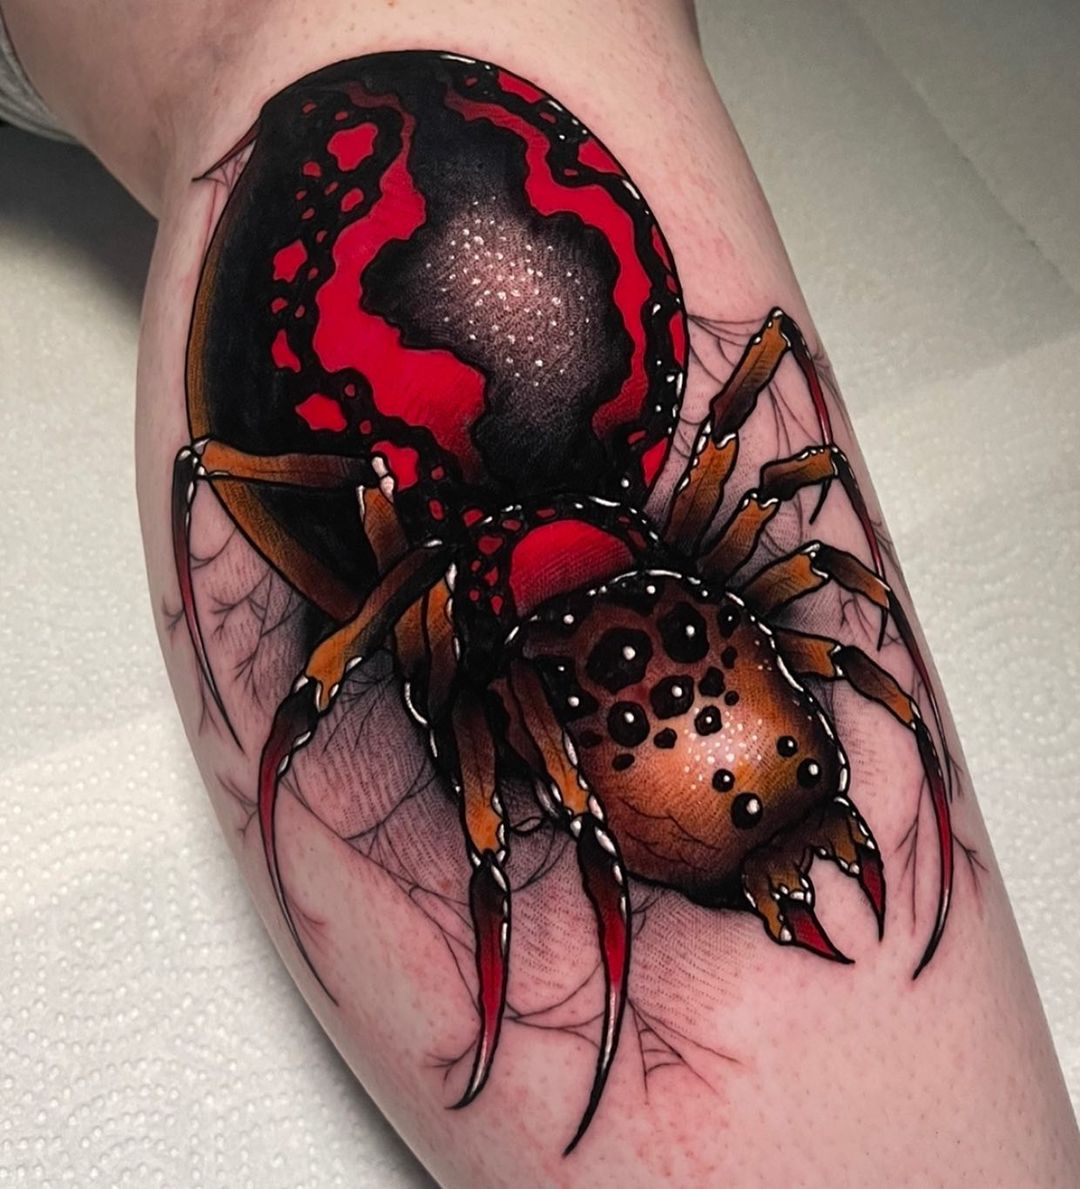 Scythe and spider tattoo - Tattoogrid.net